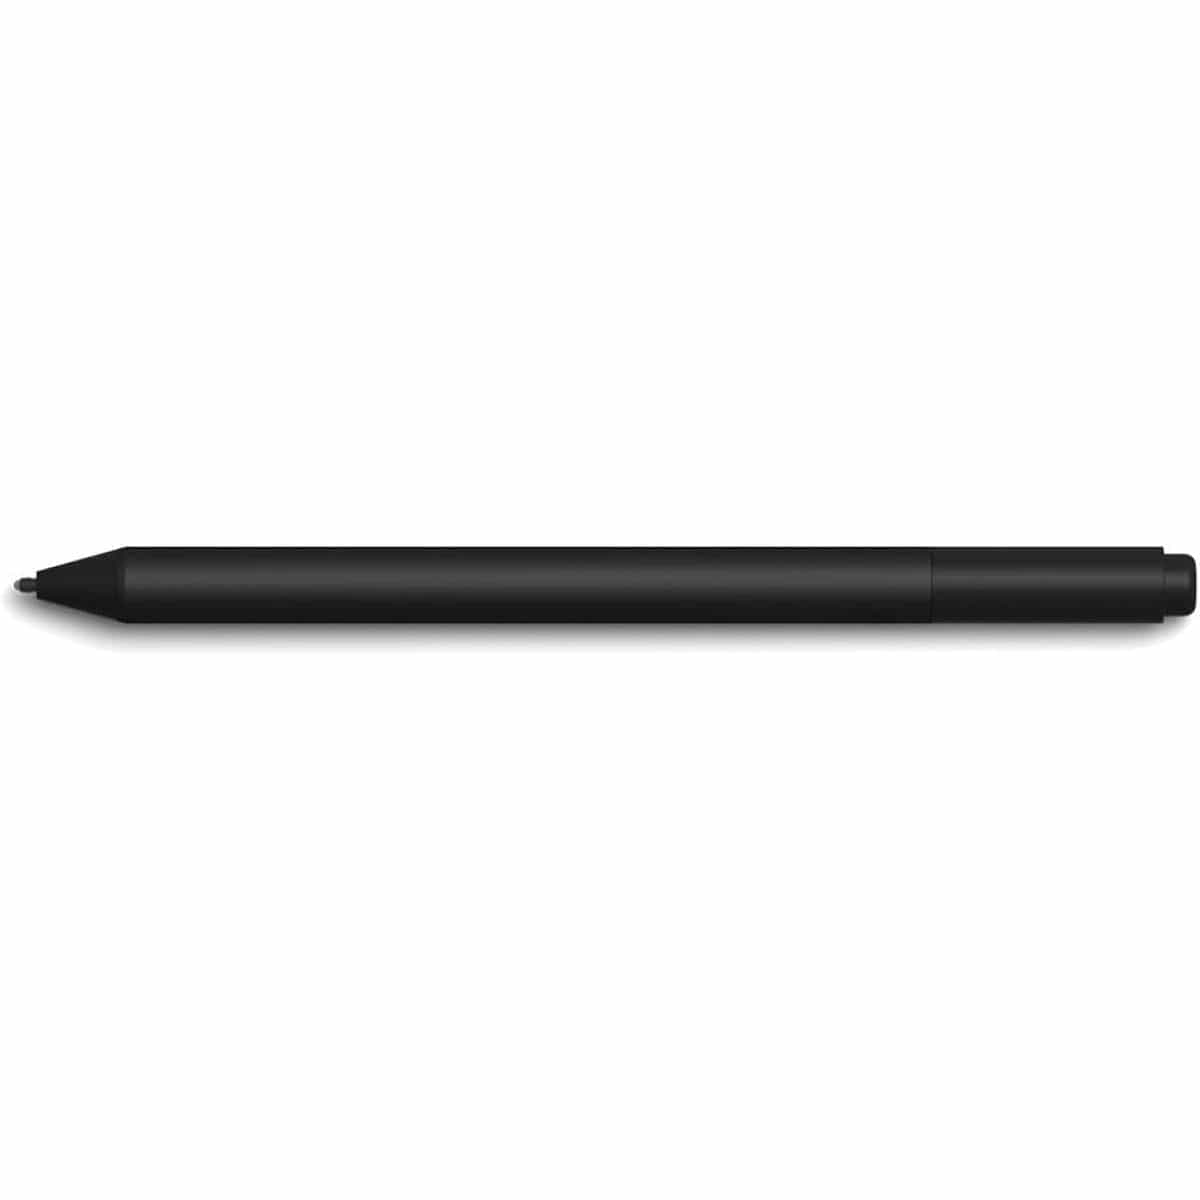 Microsoft Surface surface Black Microsoft Surface Pen stylus - Bluetooth 4.0 - platinum + Black